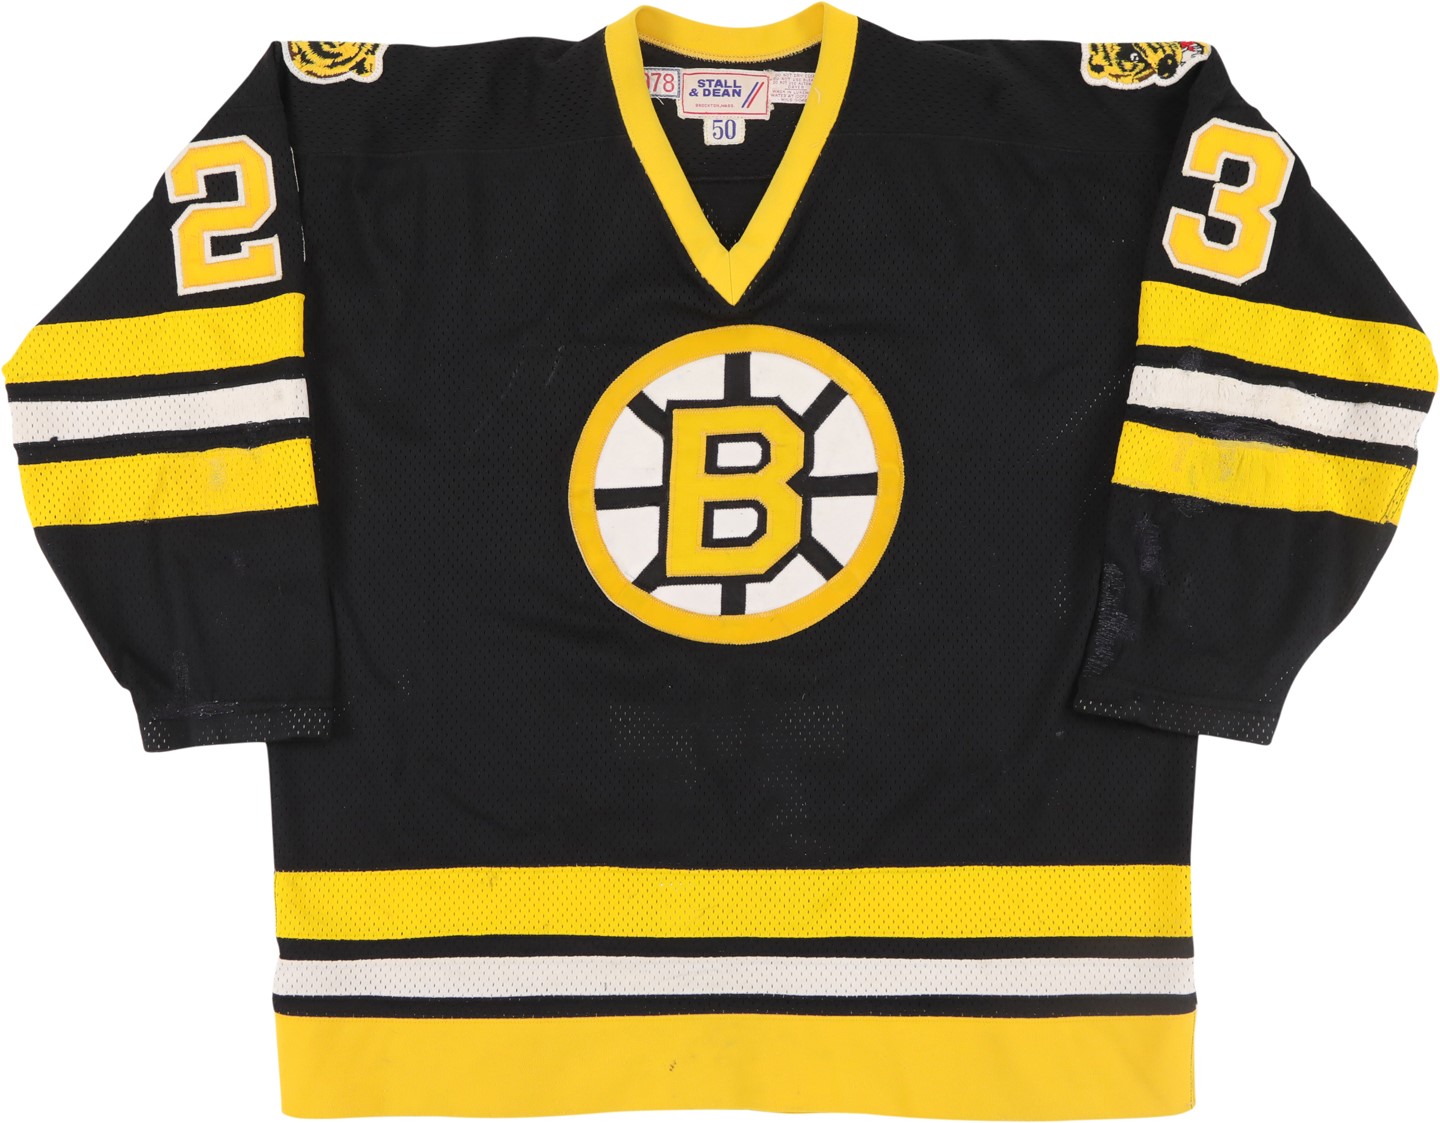 Hockey - 1978 Rick Smith Boston Bruins Game Worn Jersey